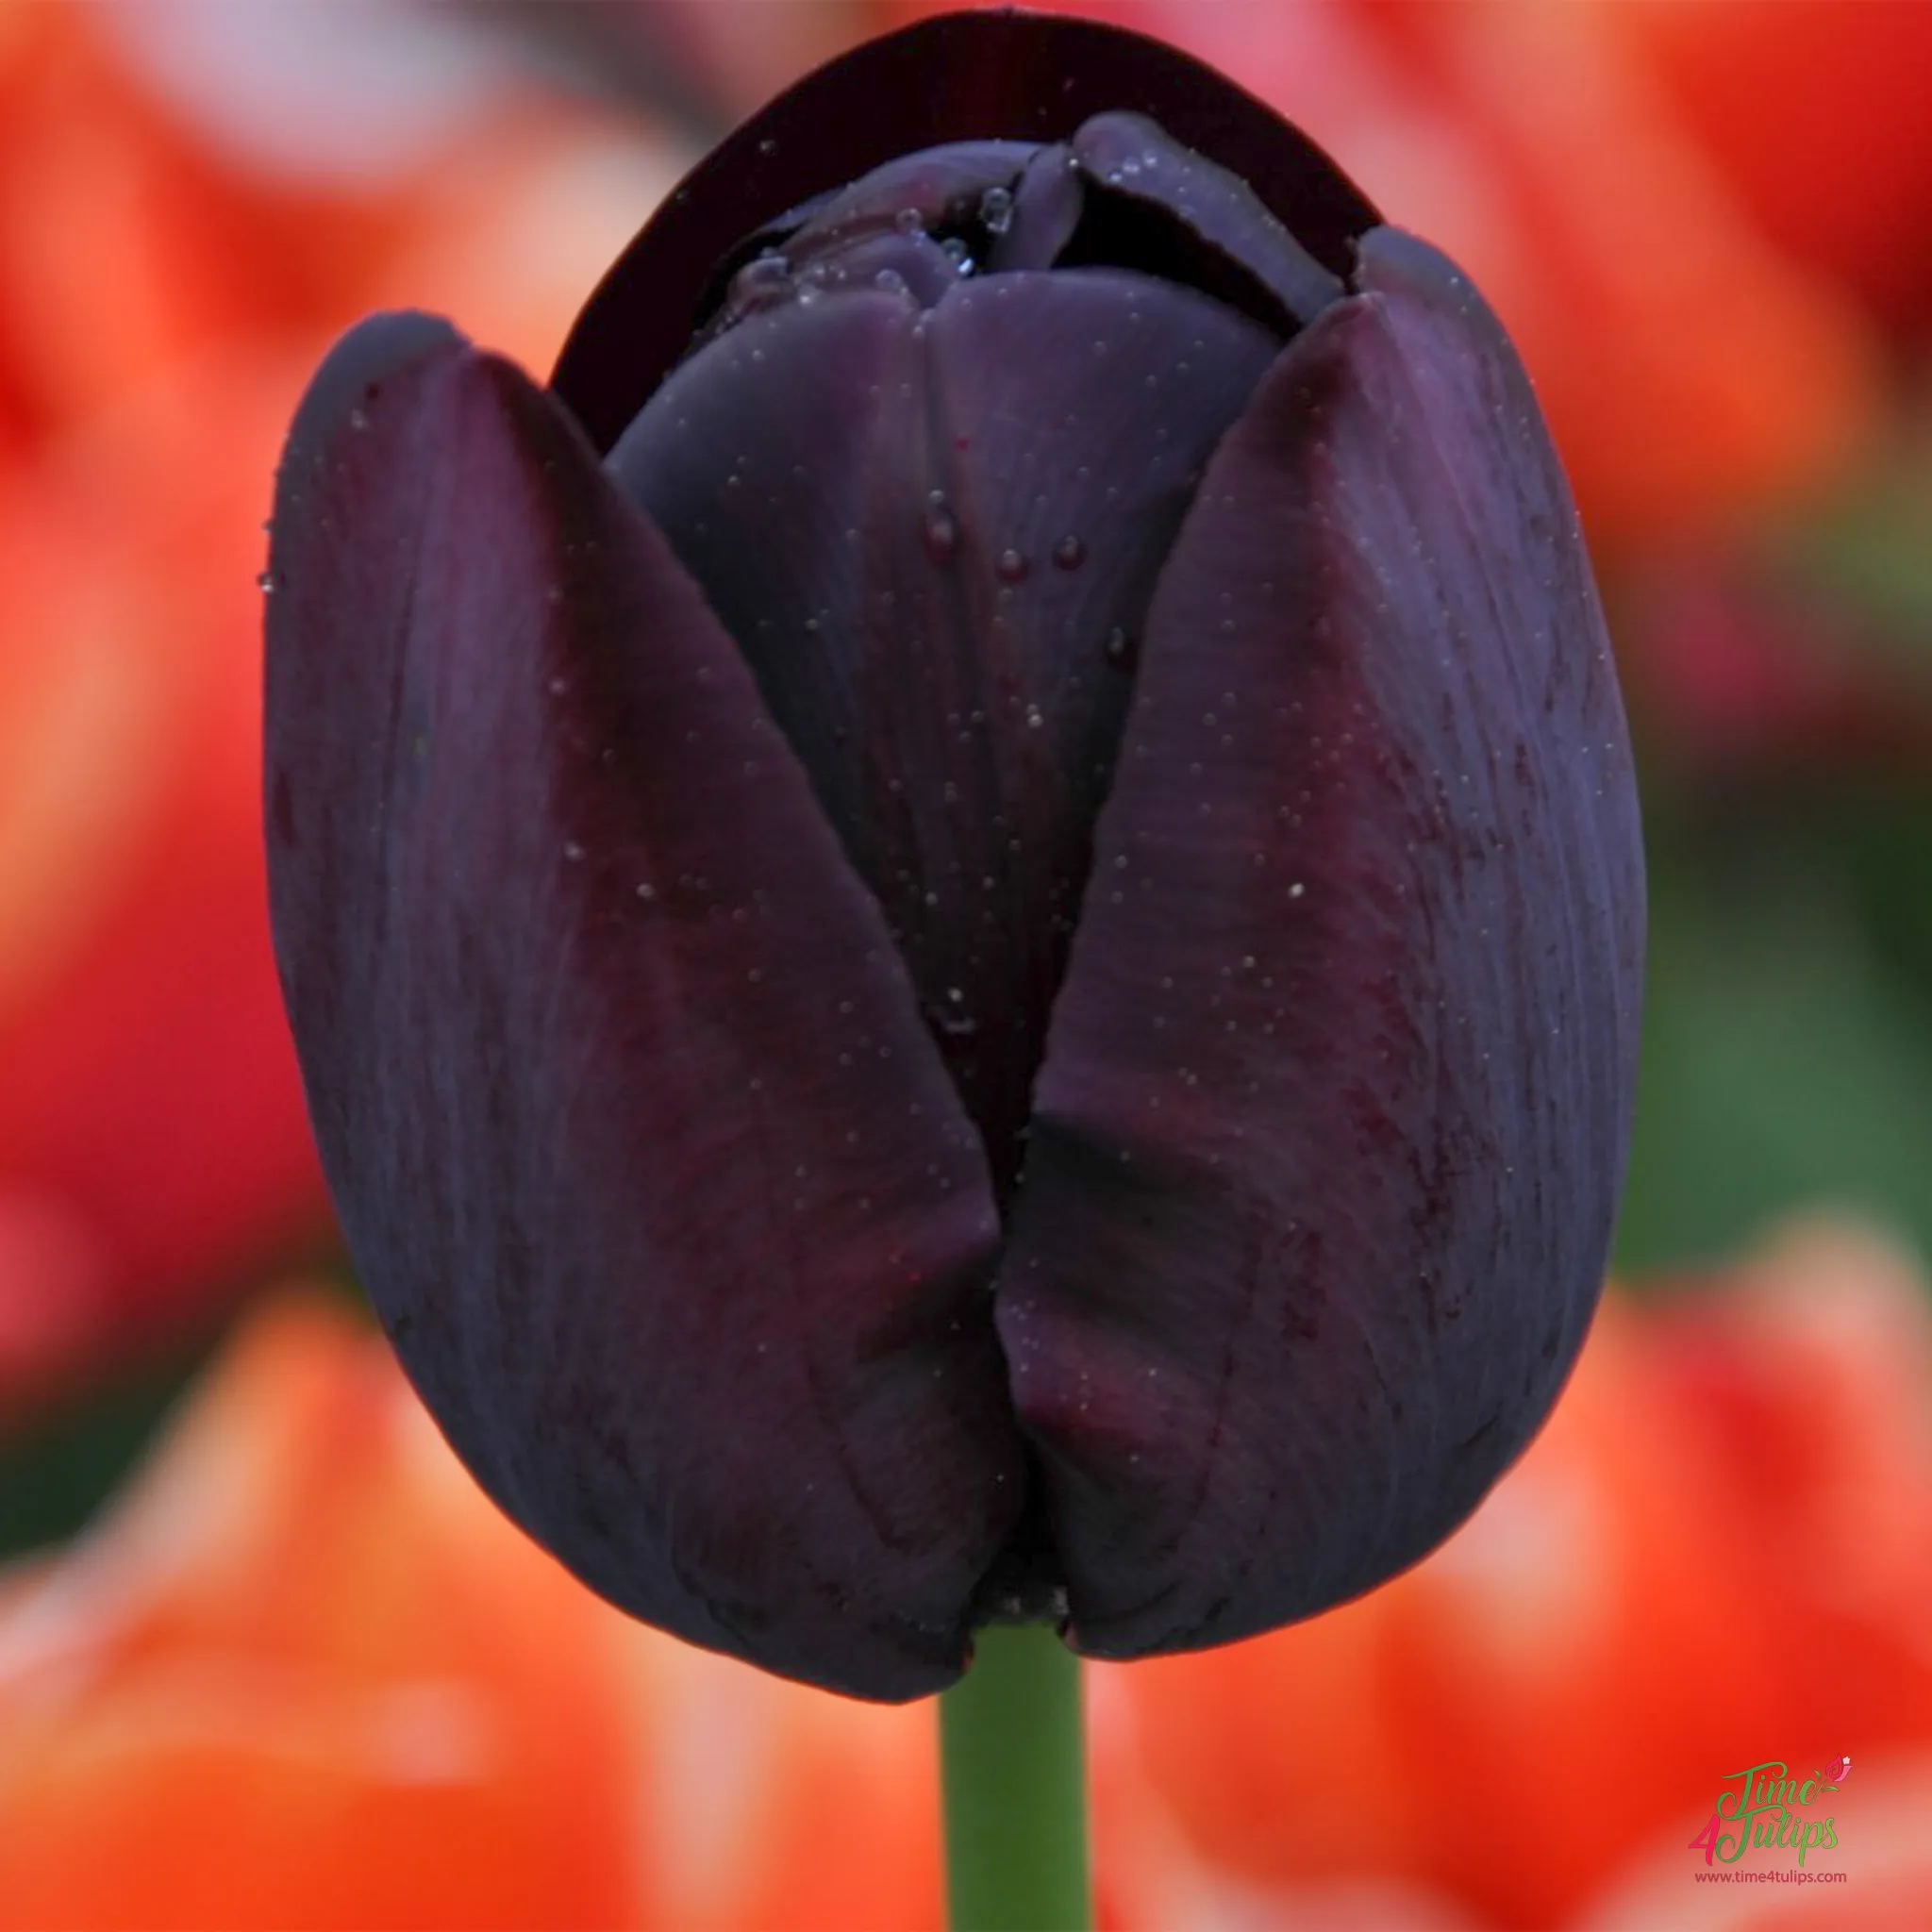 Queen of Night Tulip